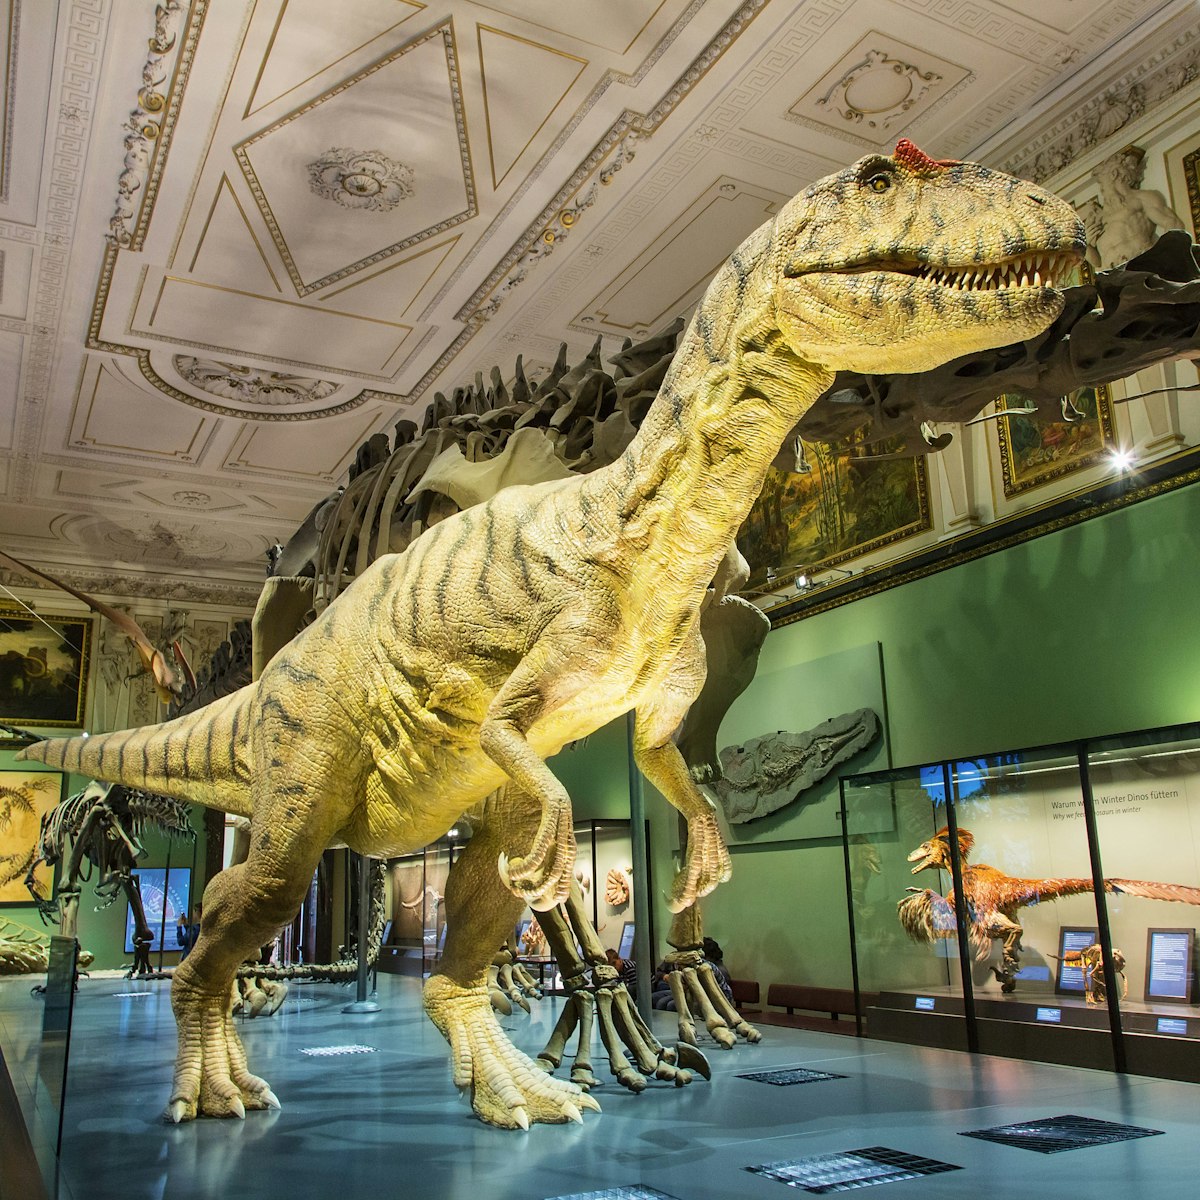 Dinosaur model inside the Naturhistorisches (Natural History) Museum in Vienna.
